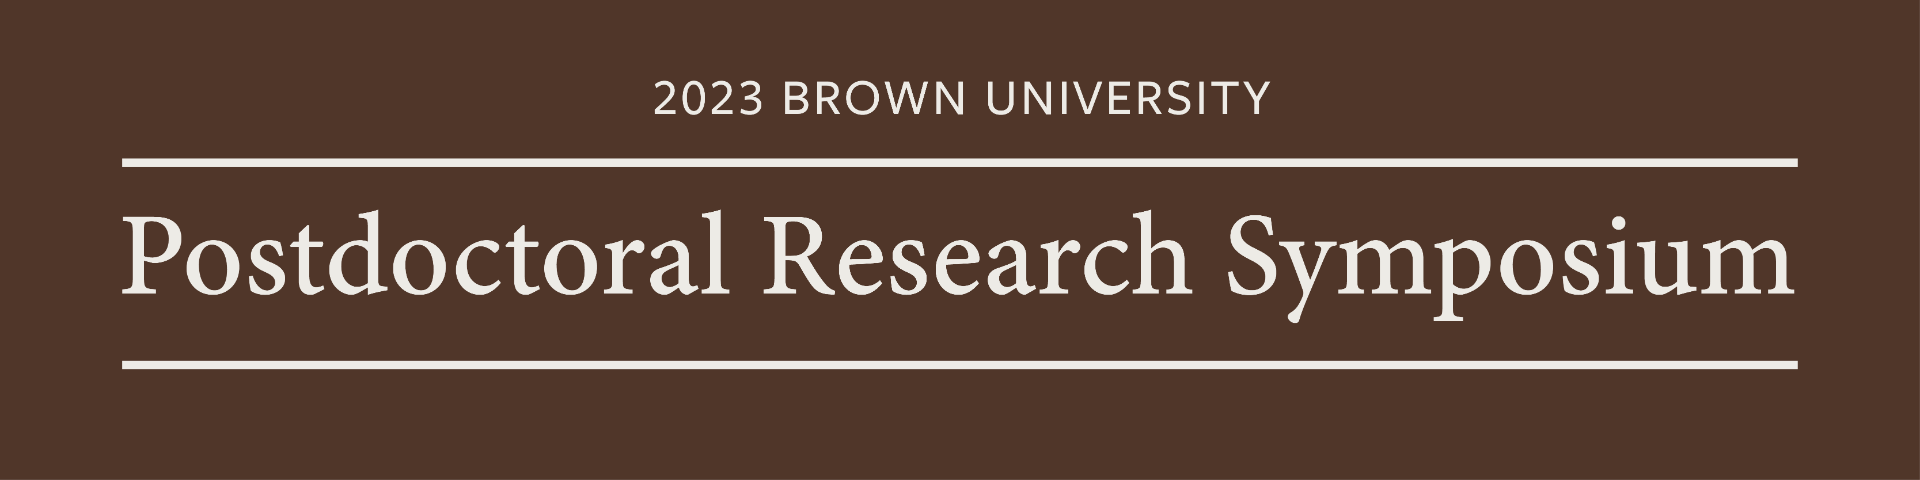 2023 Brown Postdoctoral Research Symposium